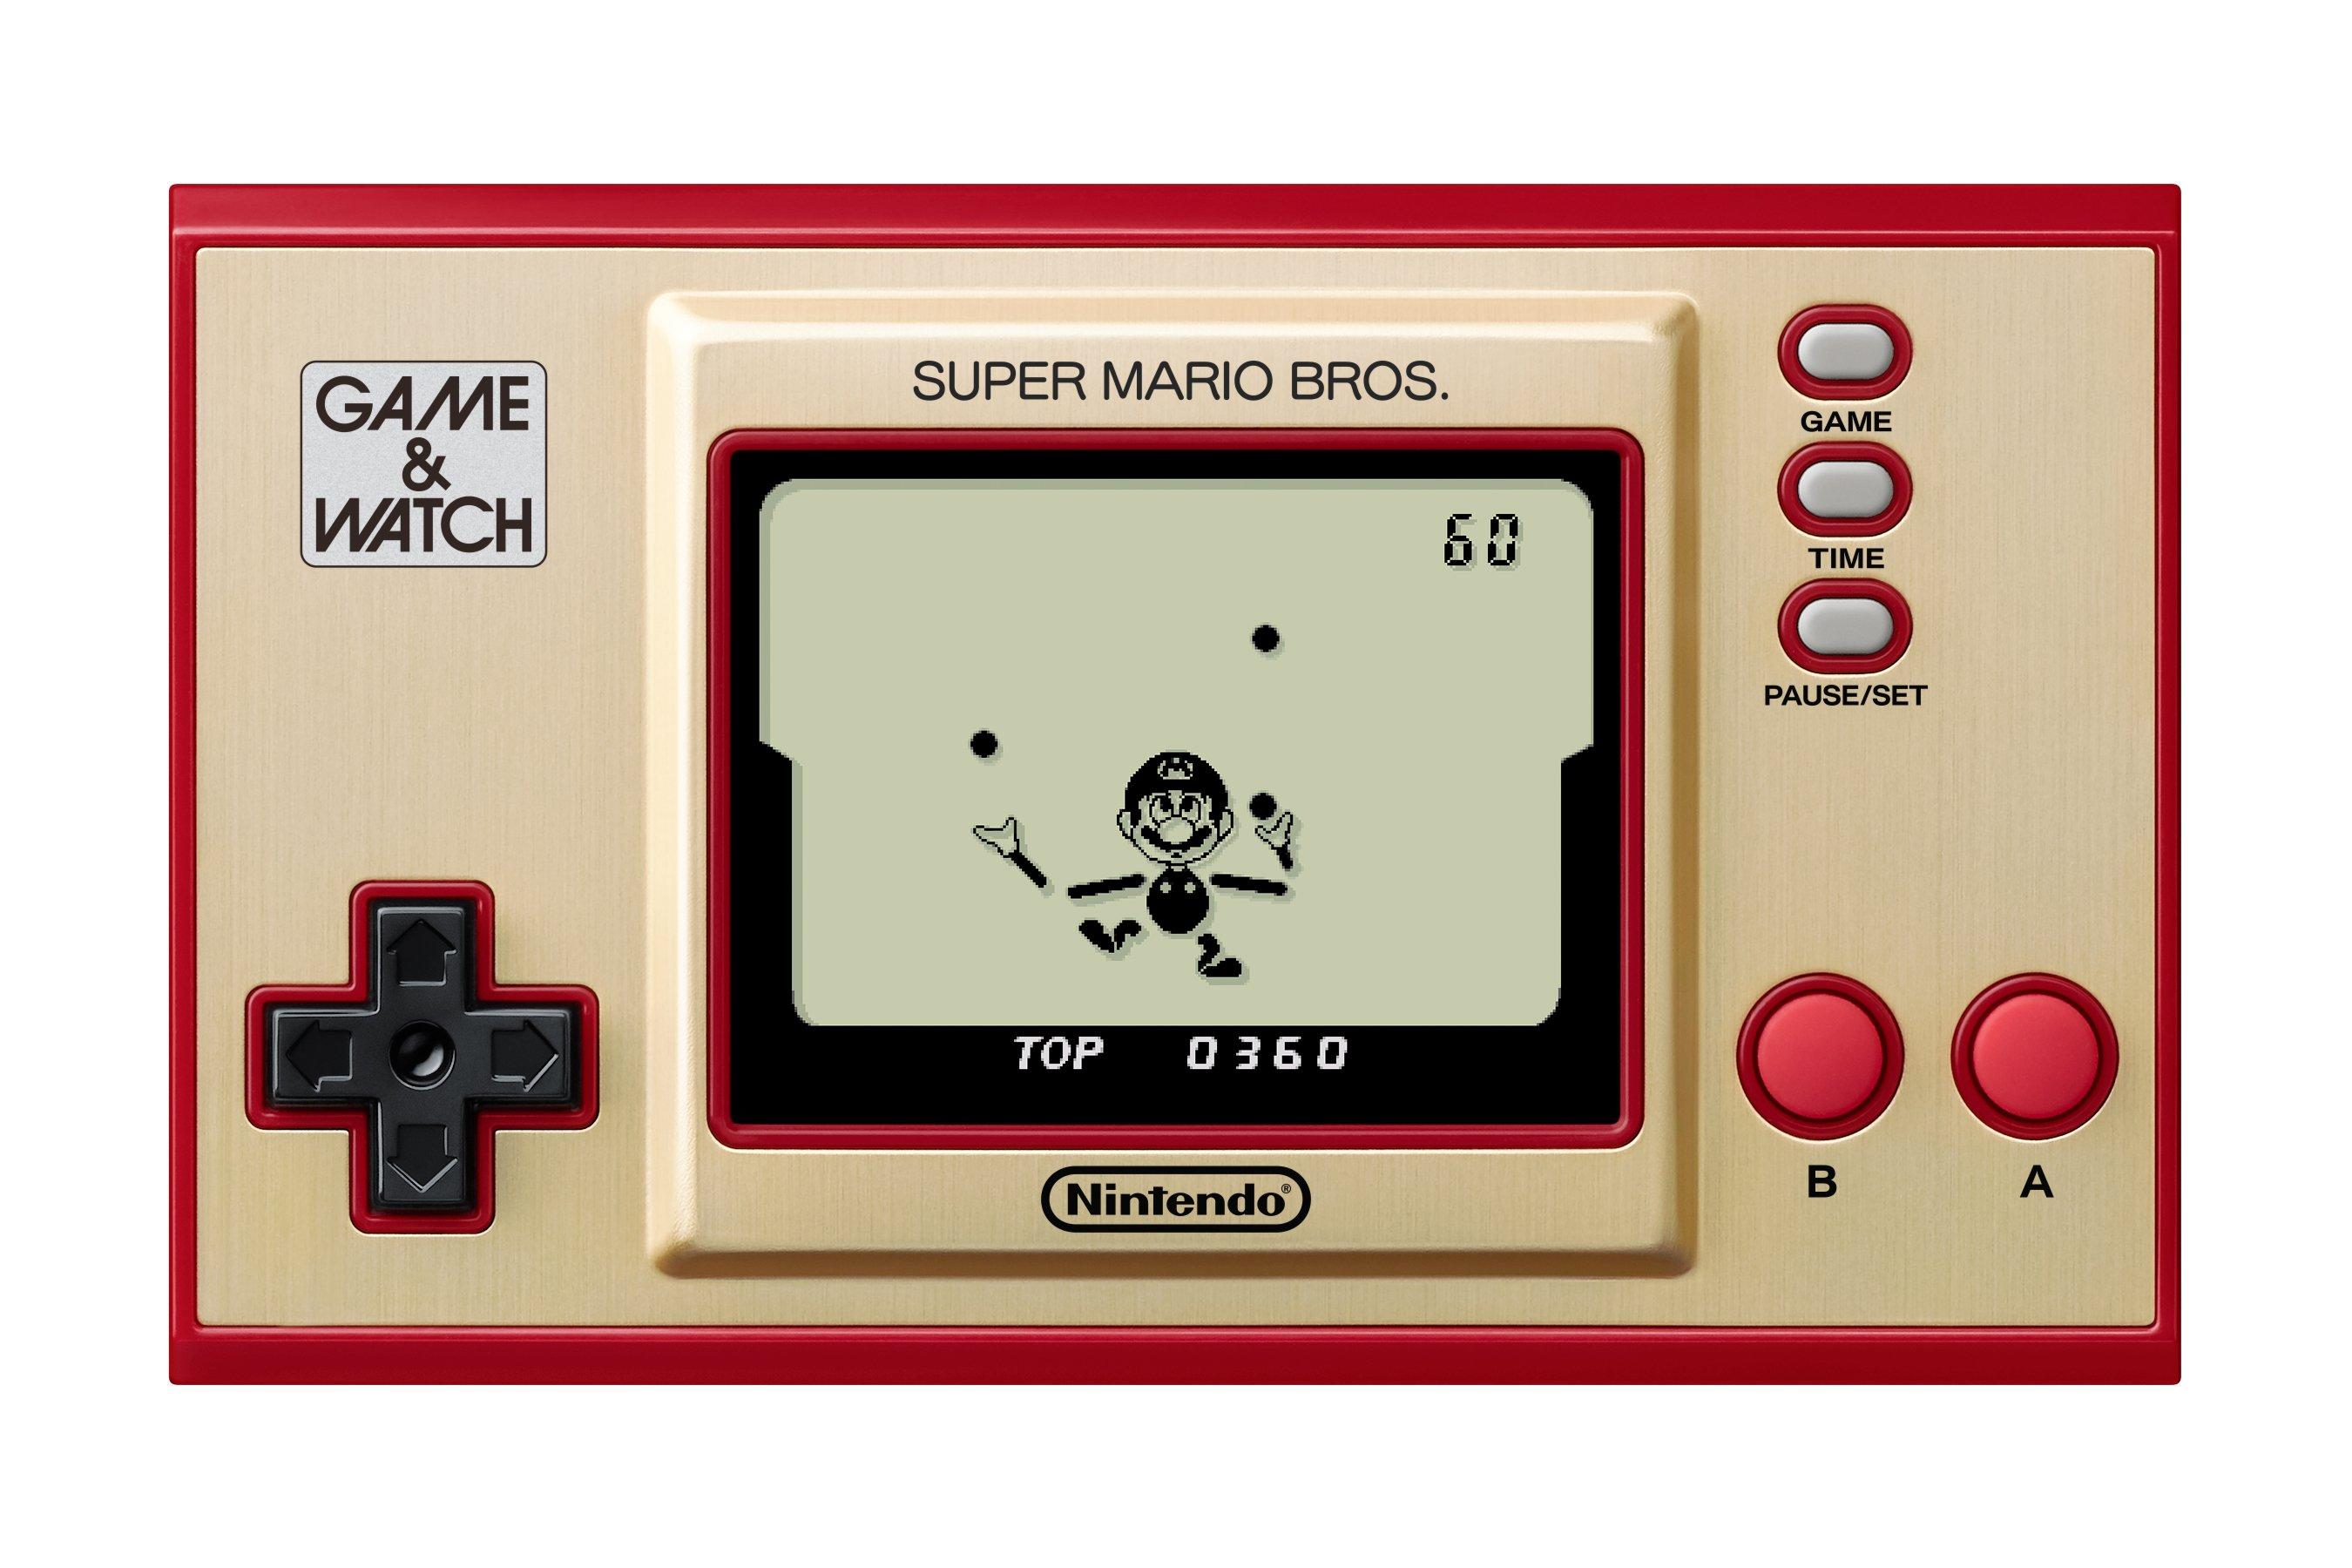 https://media.gamestop.com/i/gamestop/11108259_SCR09/Game-and-Watch-Super-Mario-Bros.?$screen$